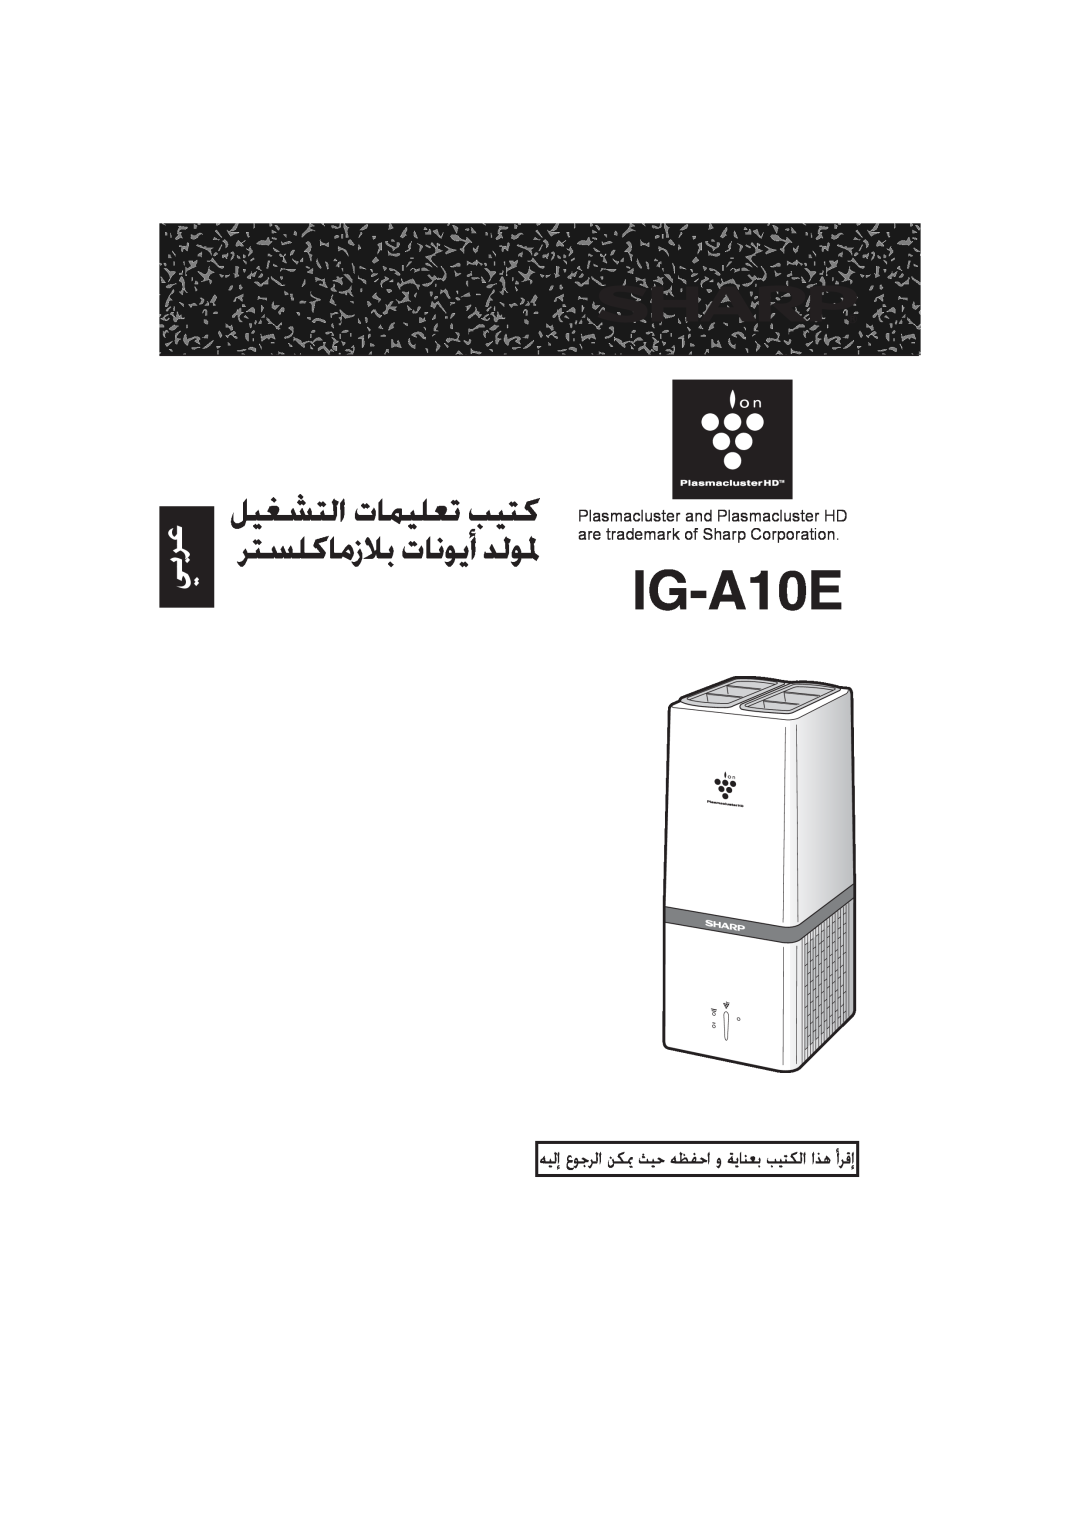 Sharp IG-A10E operation manual ﻞﻴﻐﺸﺘﻟﺍ ﺕﺎﻤﻴﻠﻌﺗ ﺐﻴﺘﻛ, ﺮﺘﺴﻠﻛﺎﻣﺯﻼﺑ ﺕﺎﻧﻮﻳﺃ ﺪﻟﻮﳌ, ﻲﺑﺮﻋ, are trademark of Sharp Corporation 